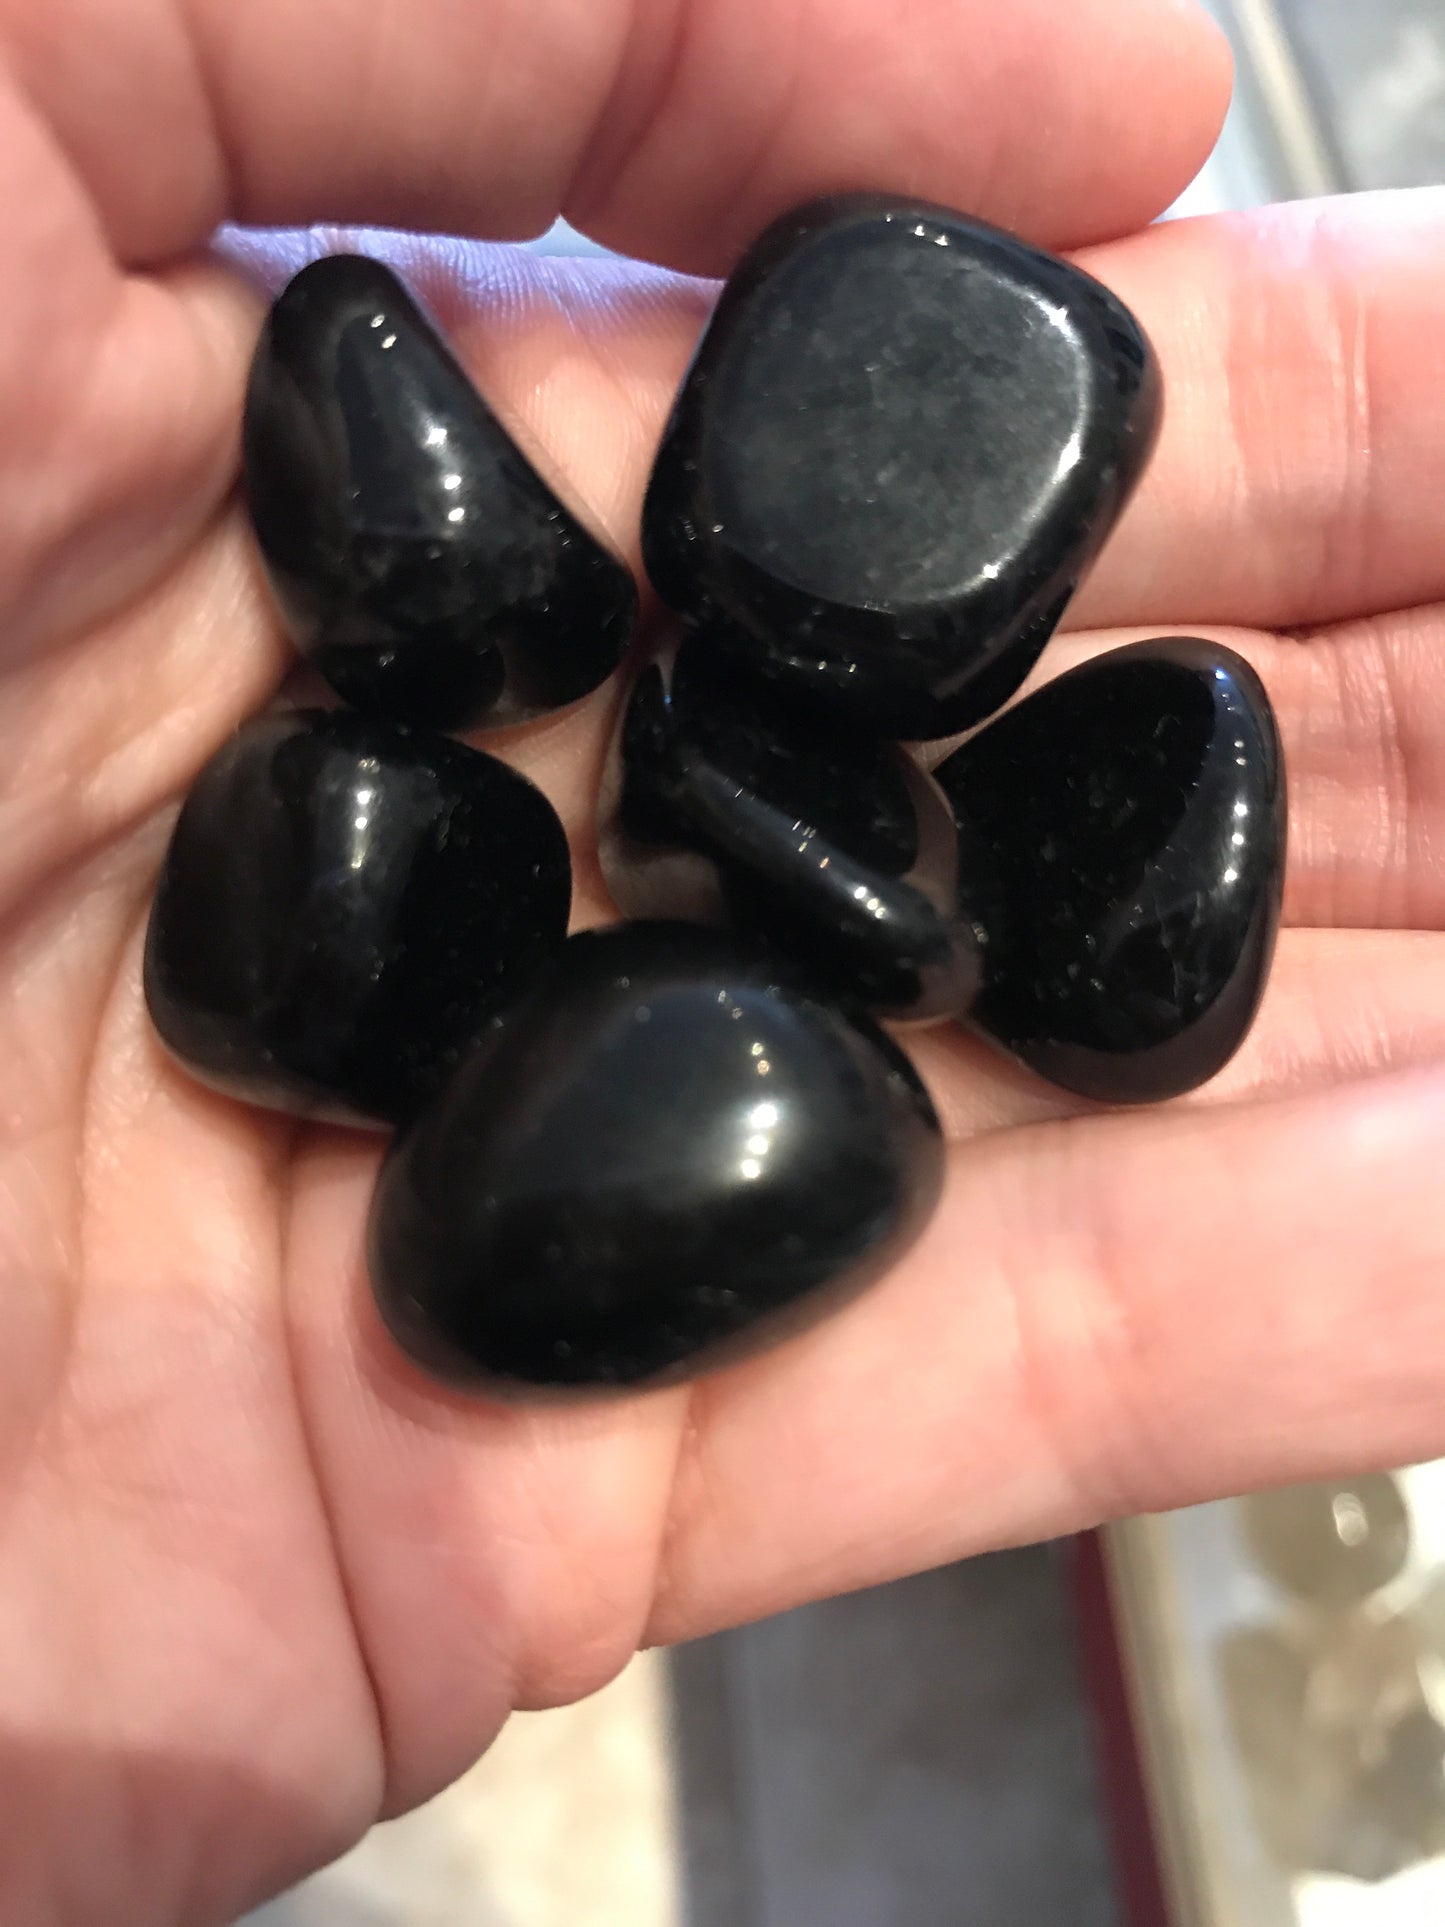 Tumbled Black Obsidian